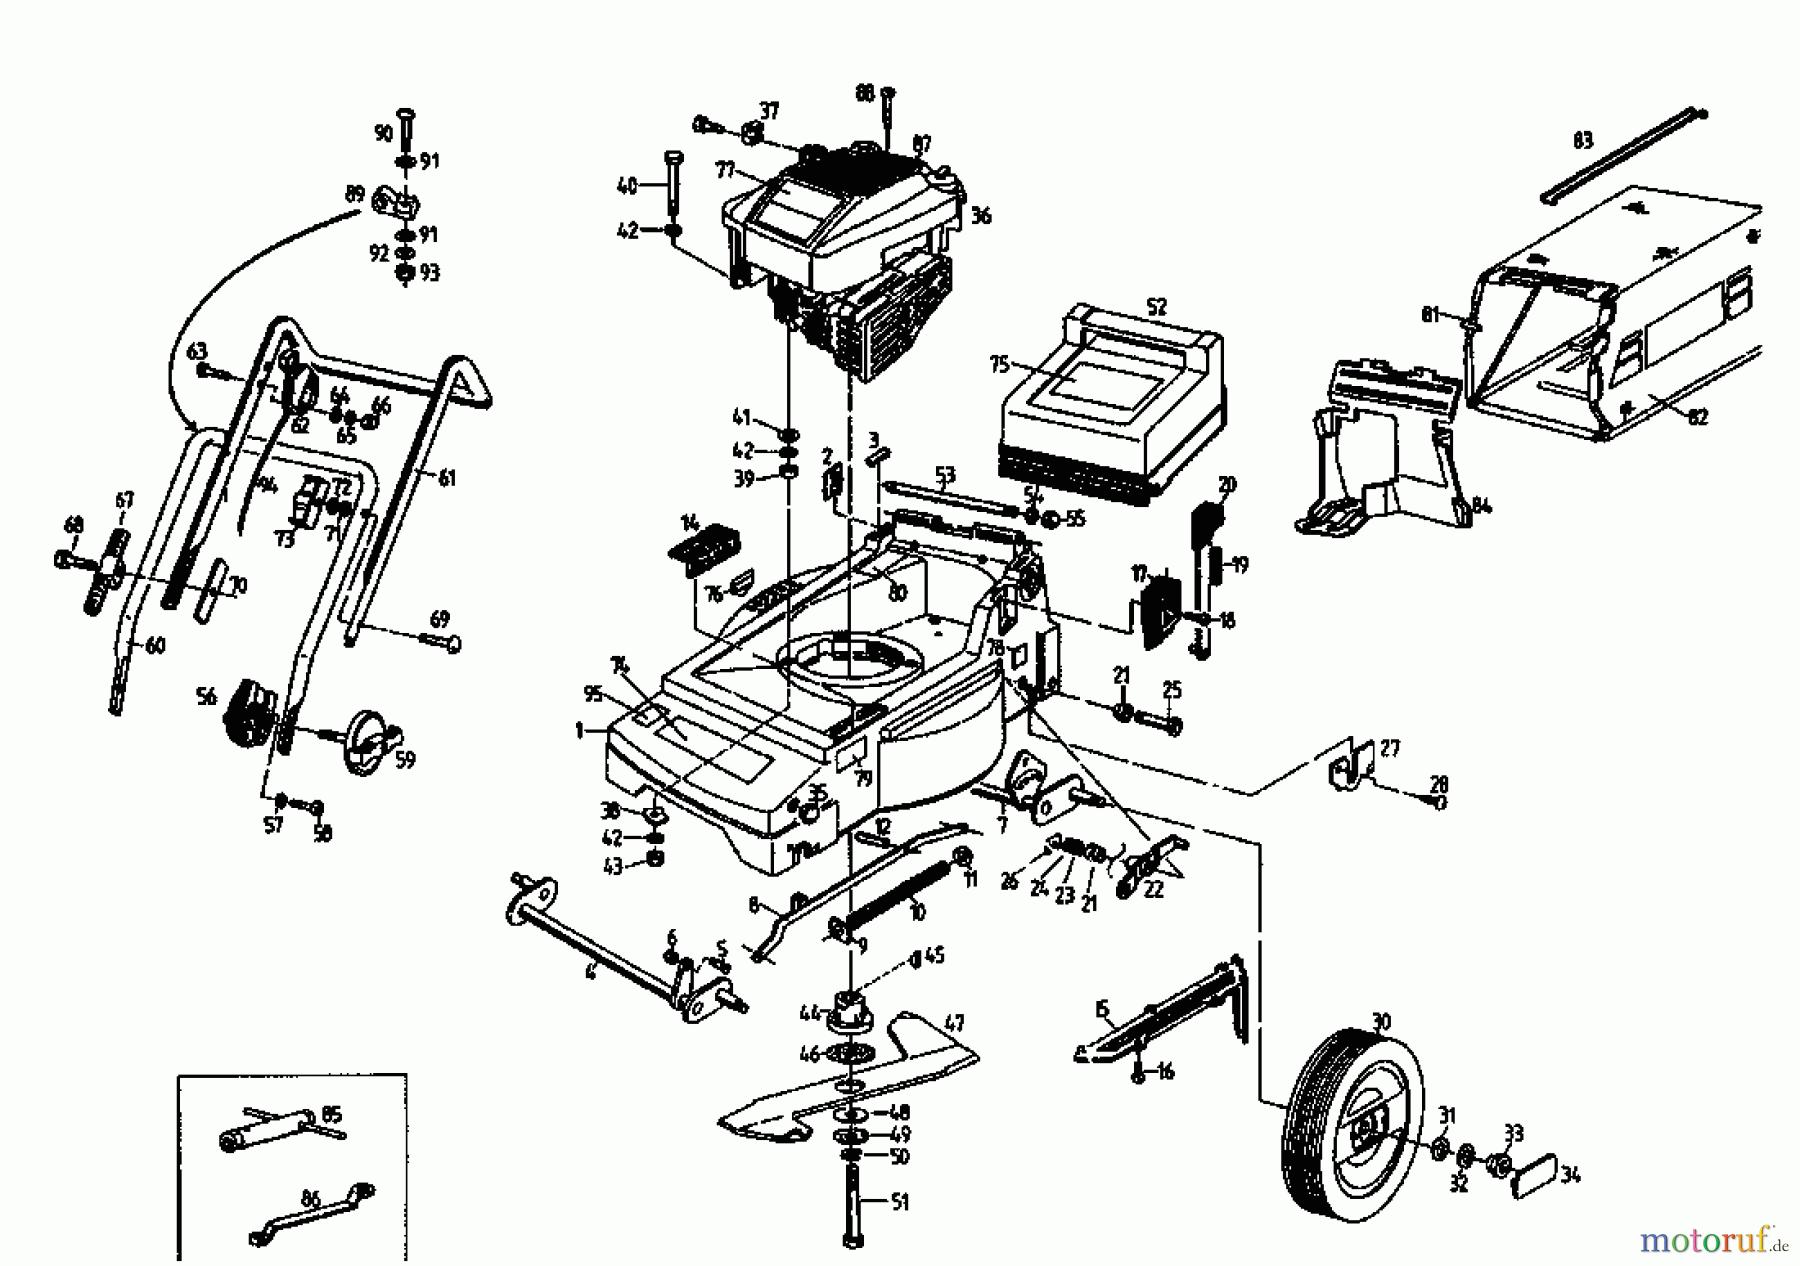  Gutbrod Petrol mower MH 404 04018.01  (1994) Basic machine